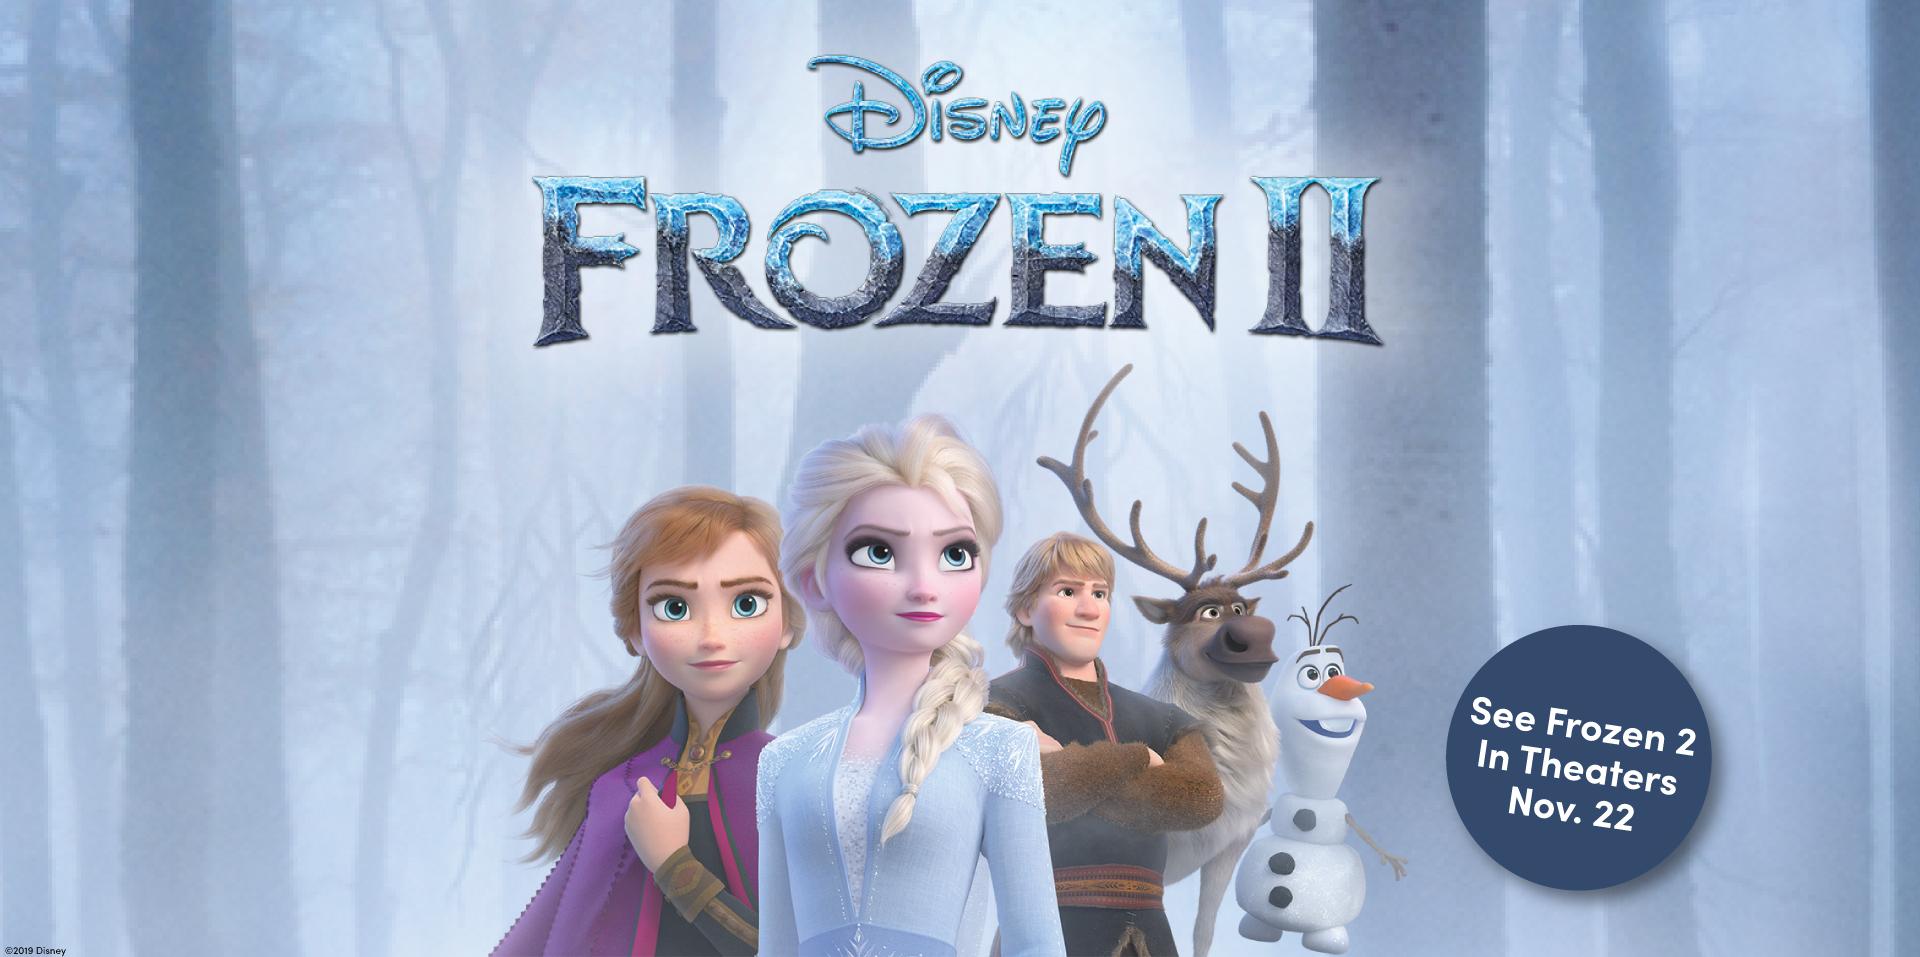 Frozen 2 Movie Premiere Sweepstakes!